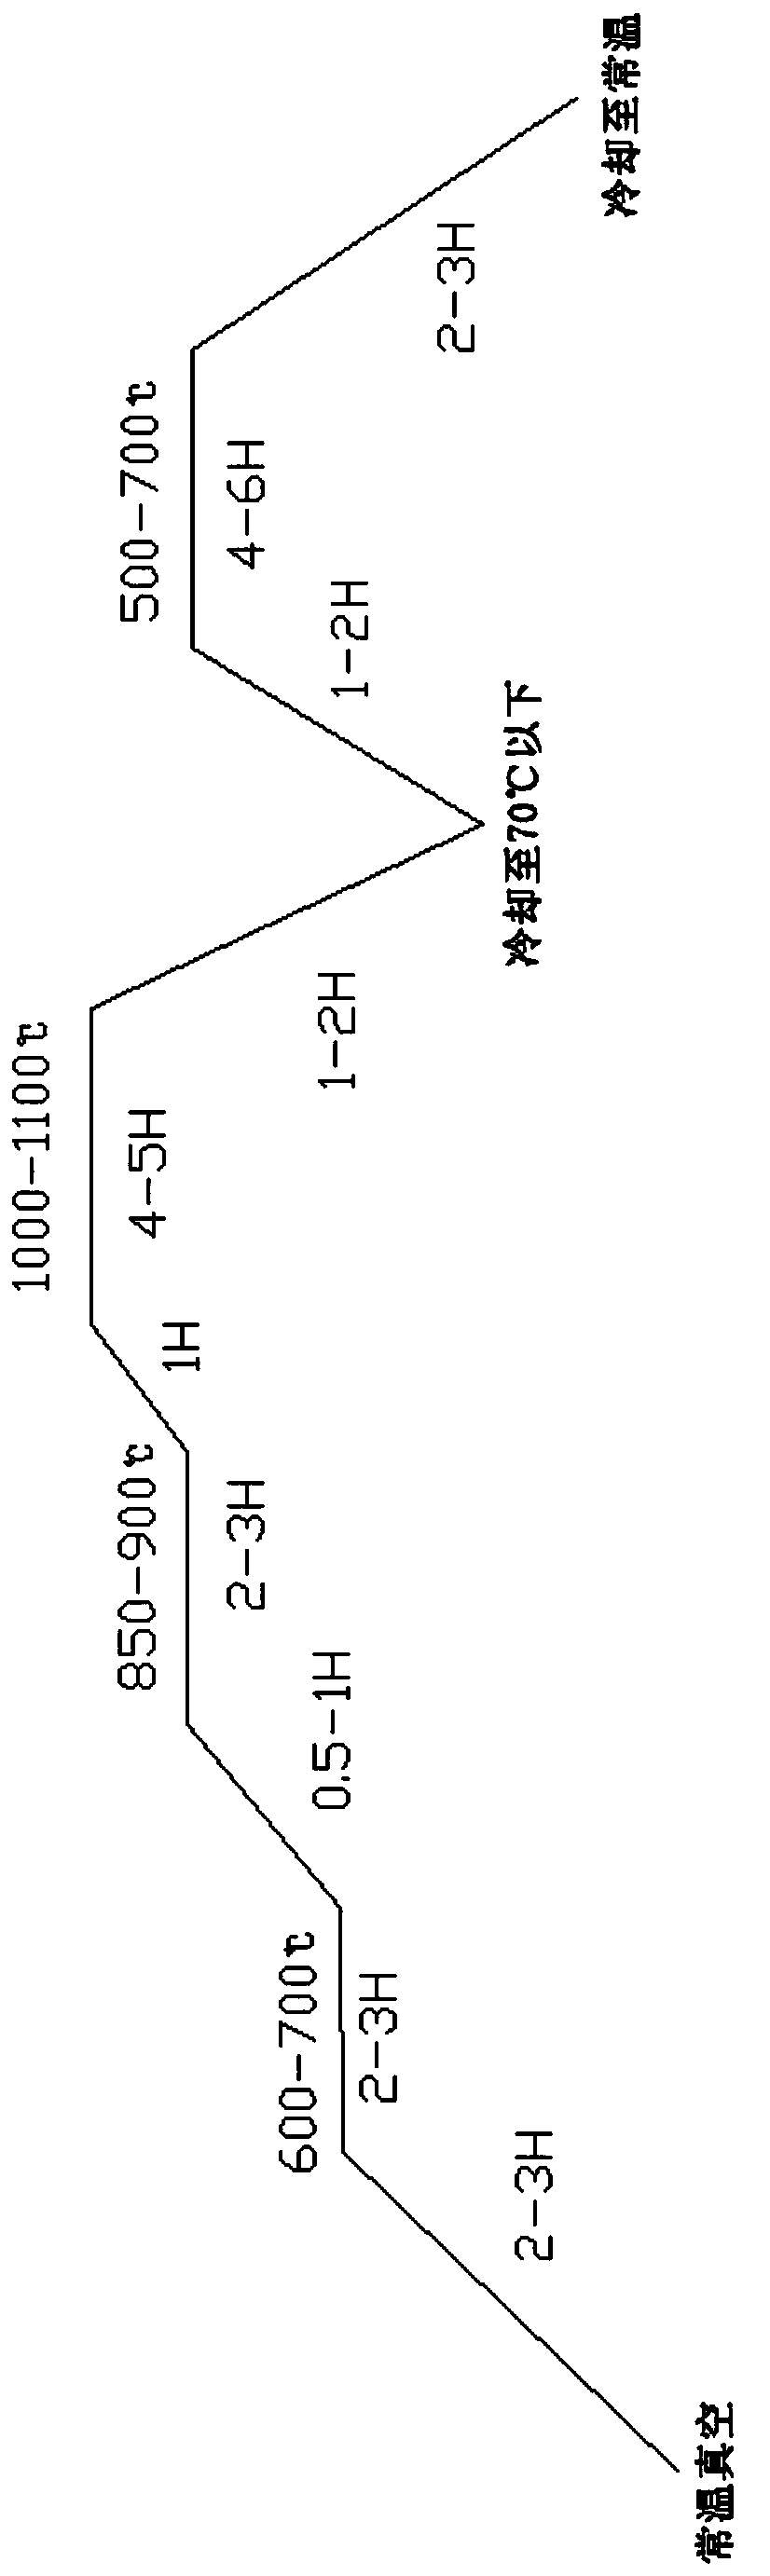 Sintering process of lanthanum cerium-containing sintered NdFeB